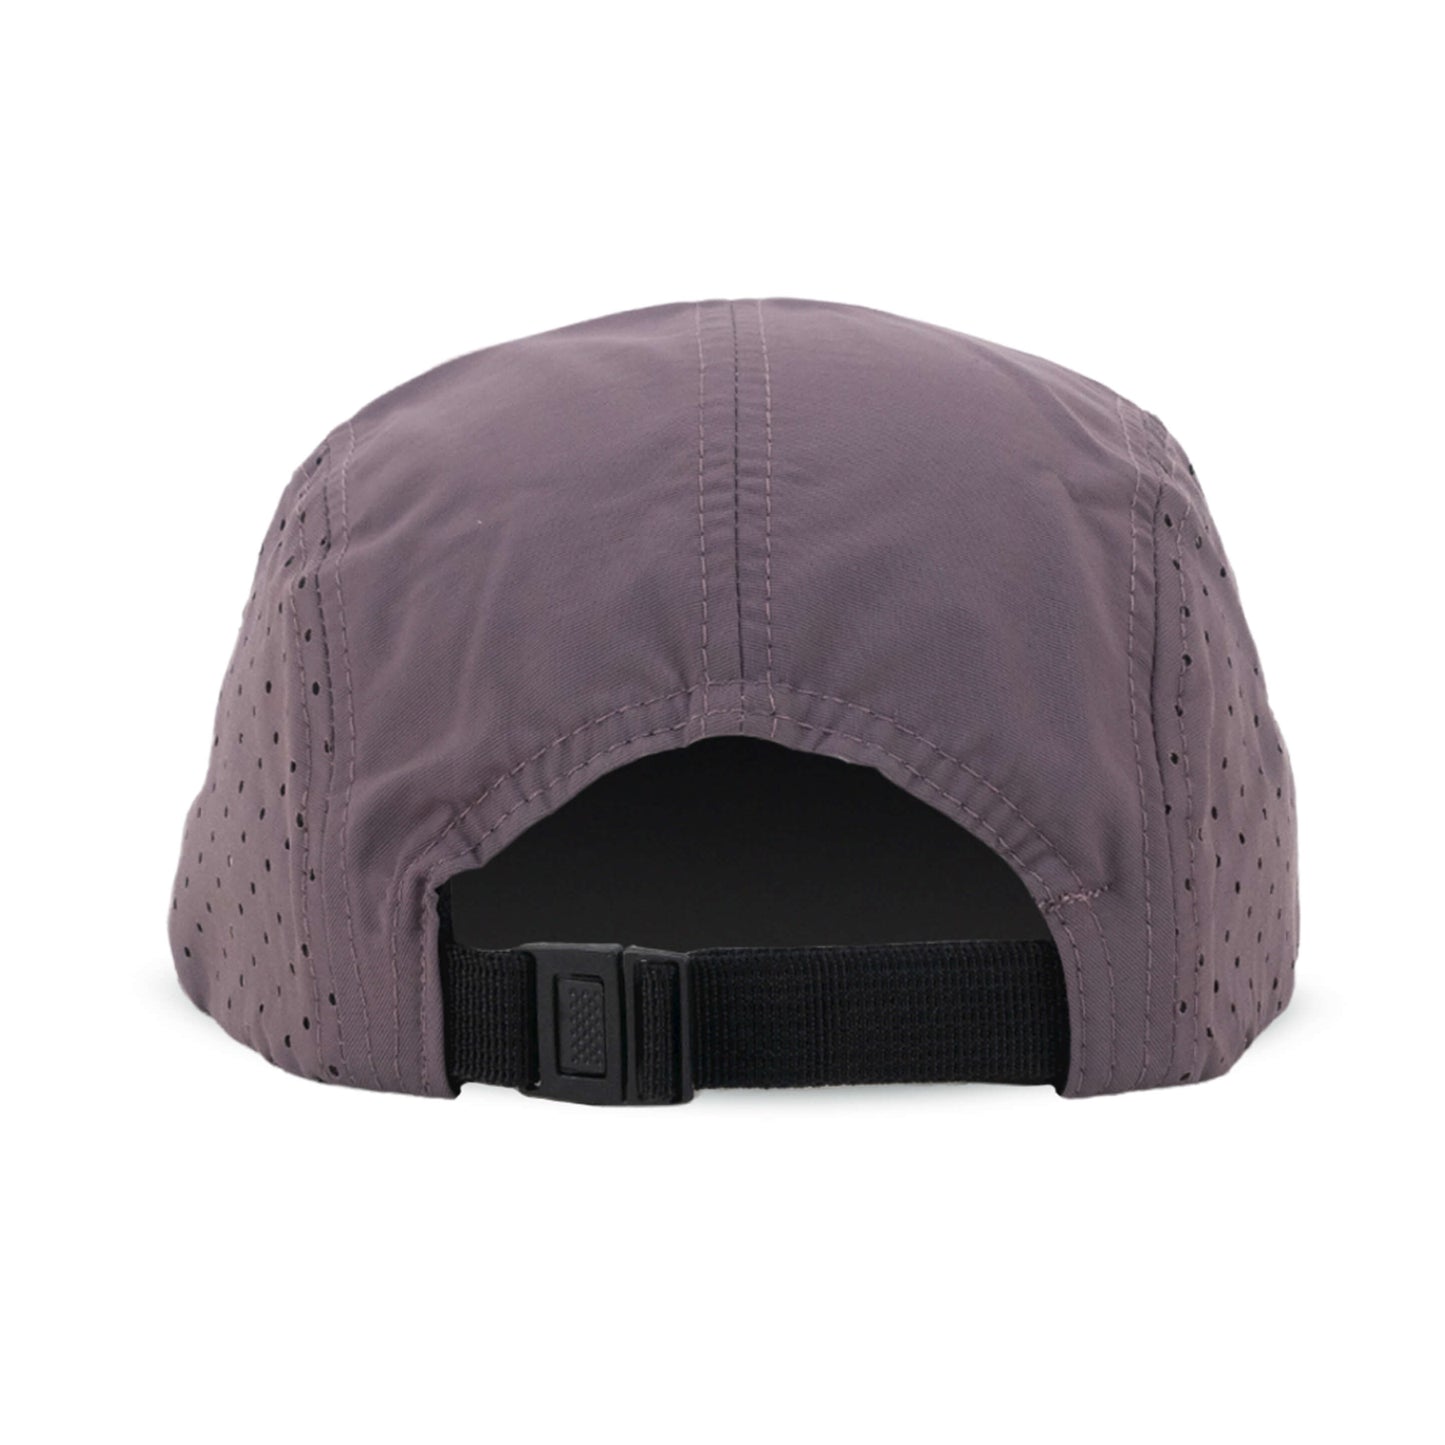 Denali - Nylon Camp Hat